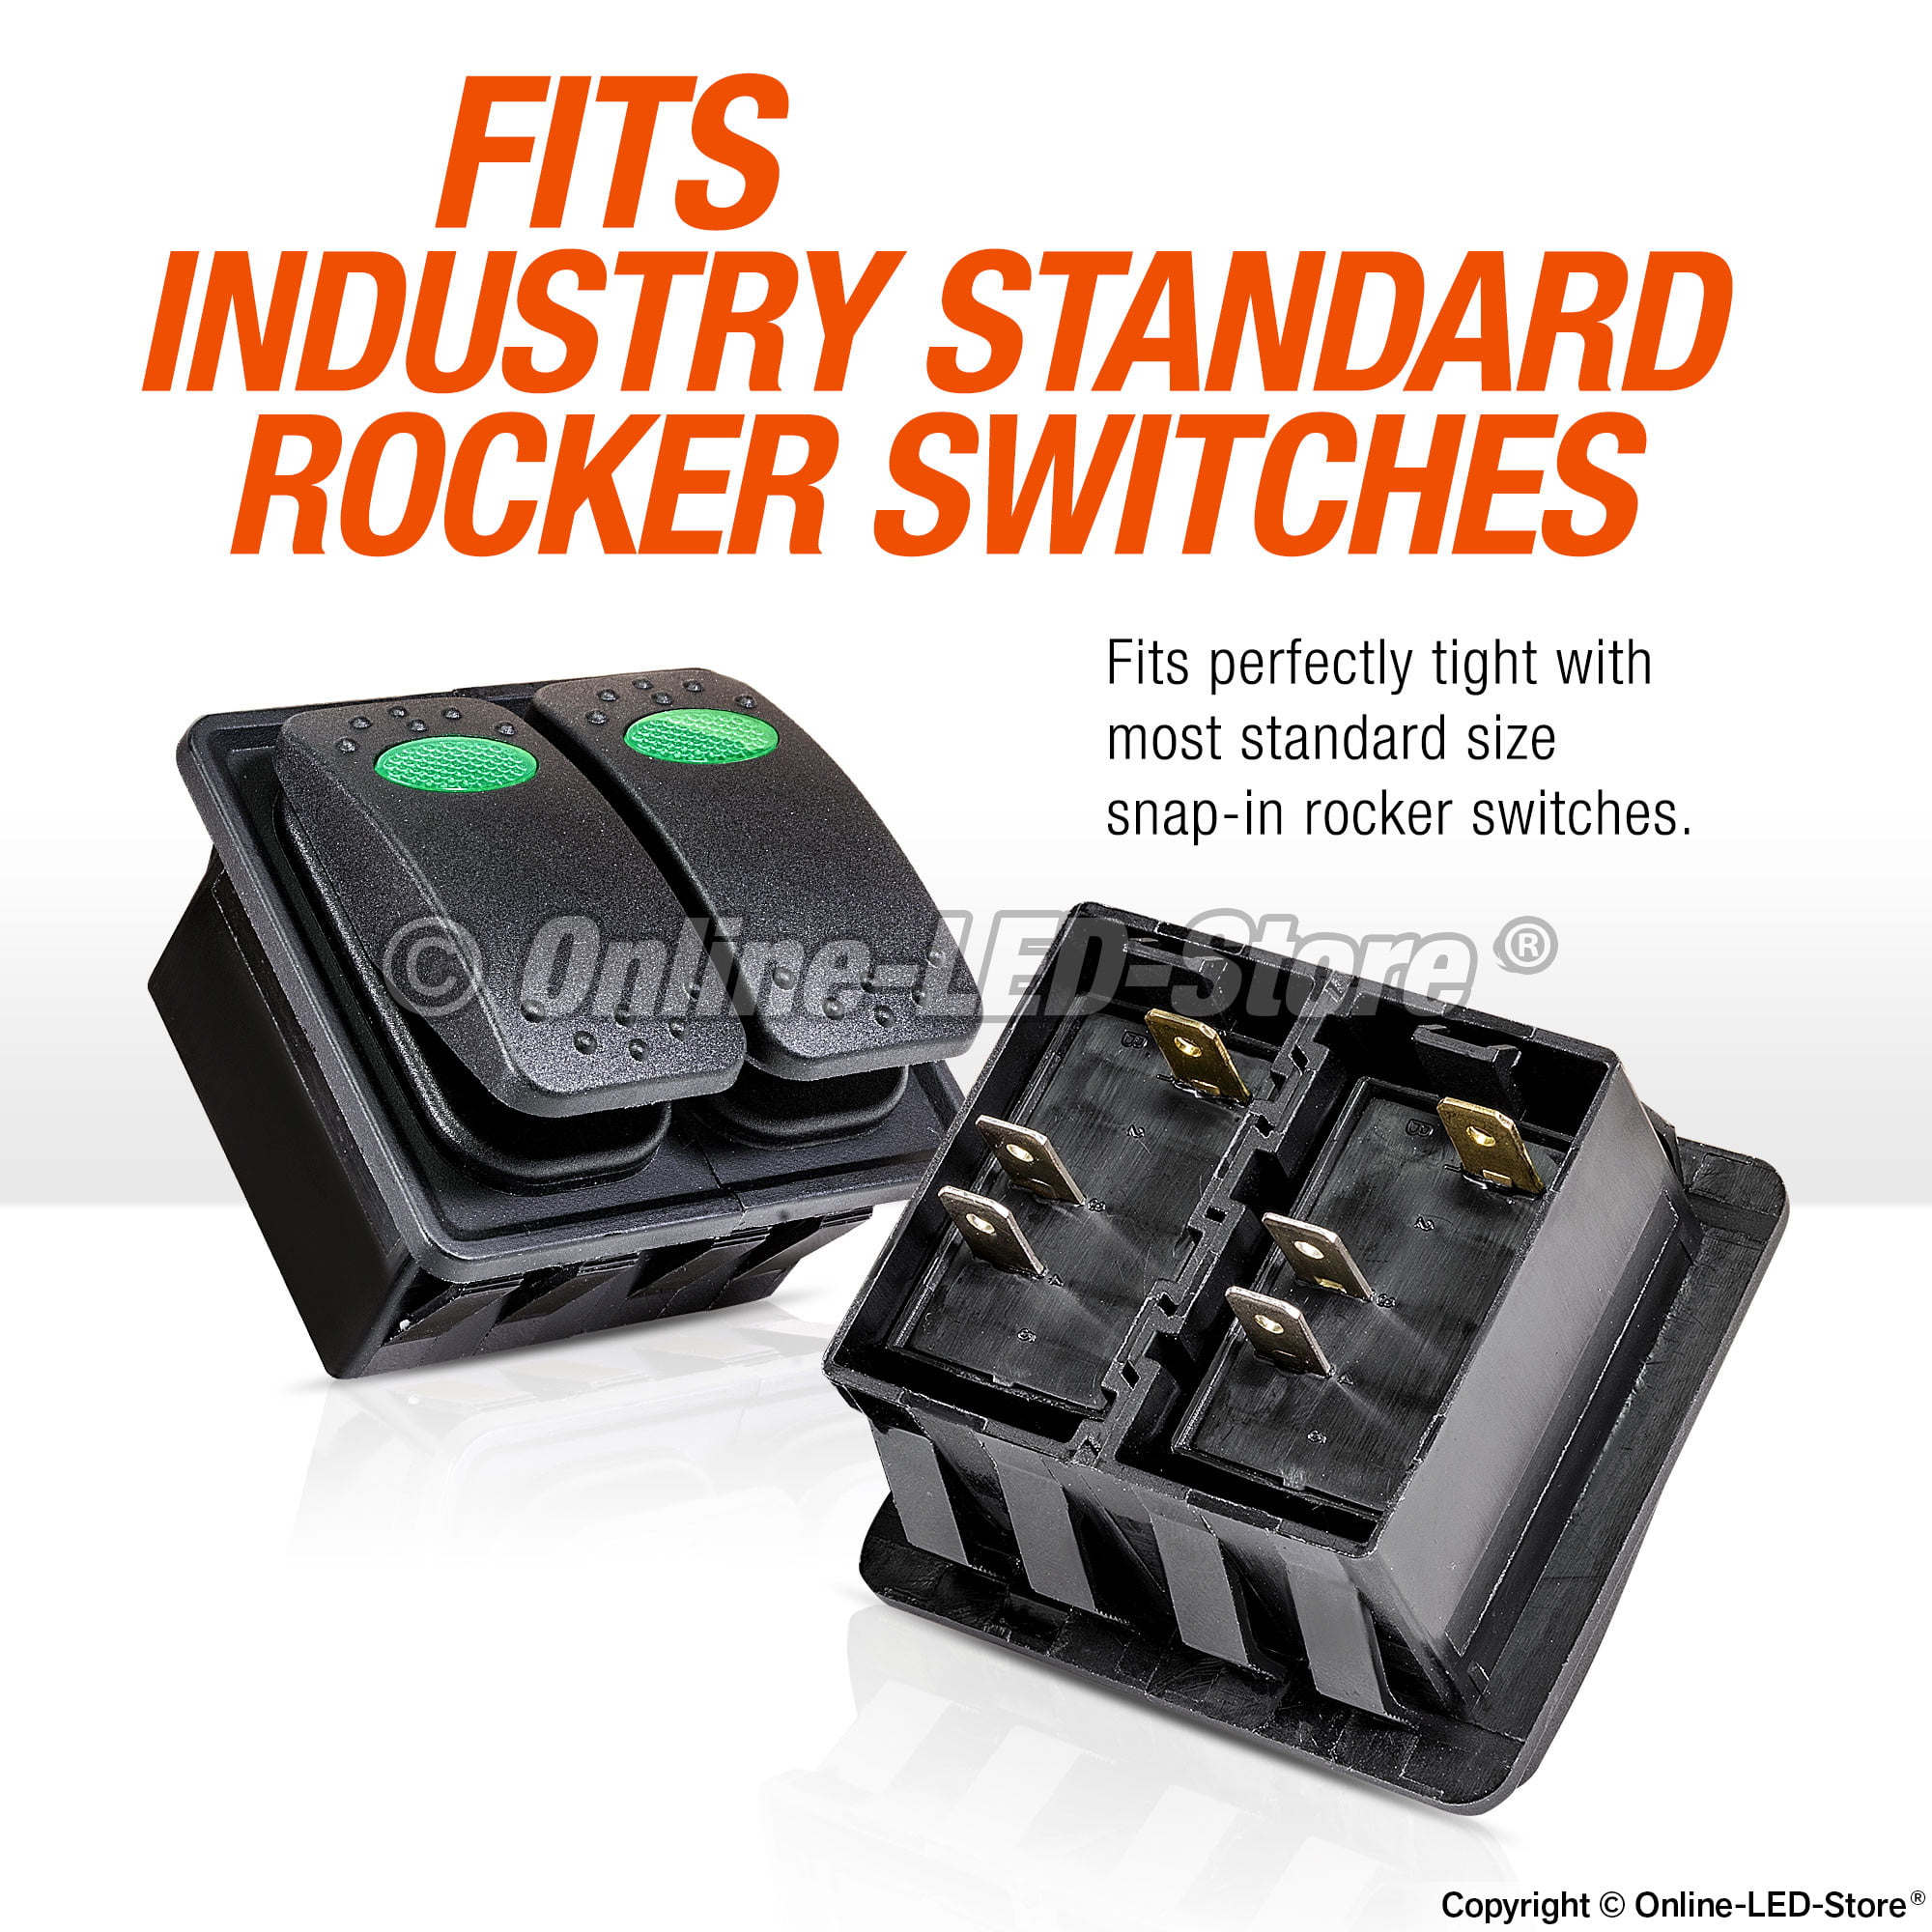 Heavy Duty 3-Slot Rocker Switch Panel Housing Kit Automotive Mount Rocker Switch Holder Professional Look Expandable Design Industry Standard Fit